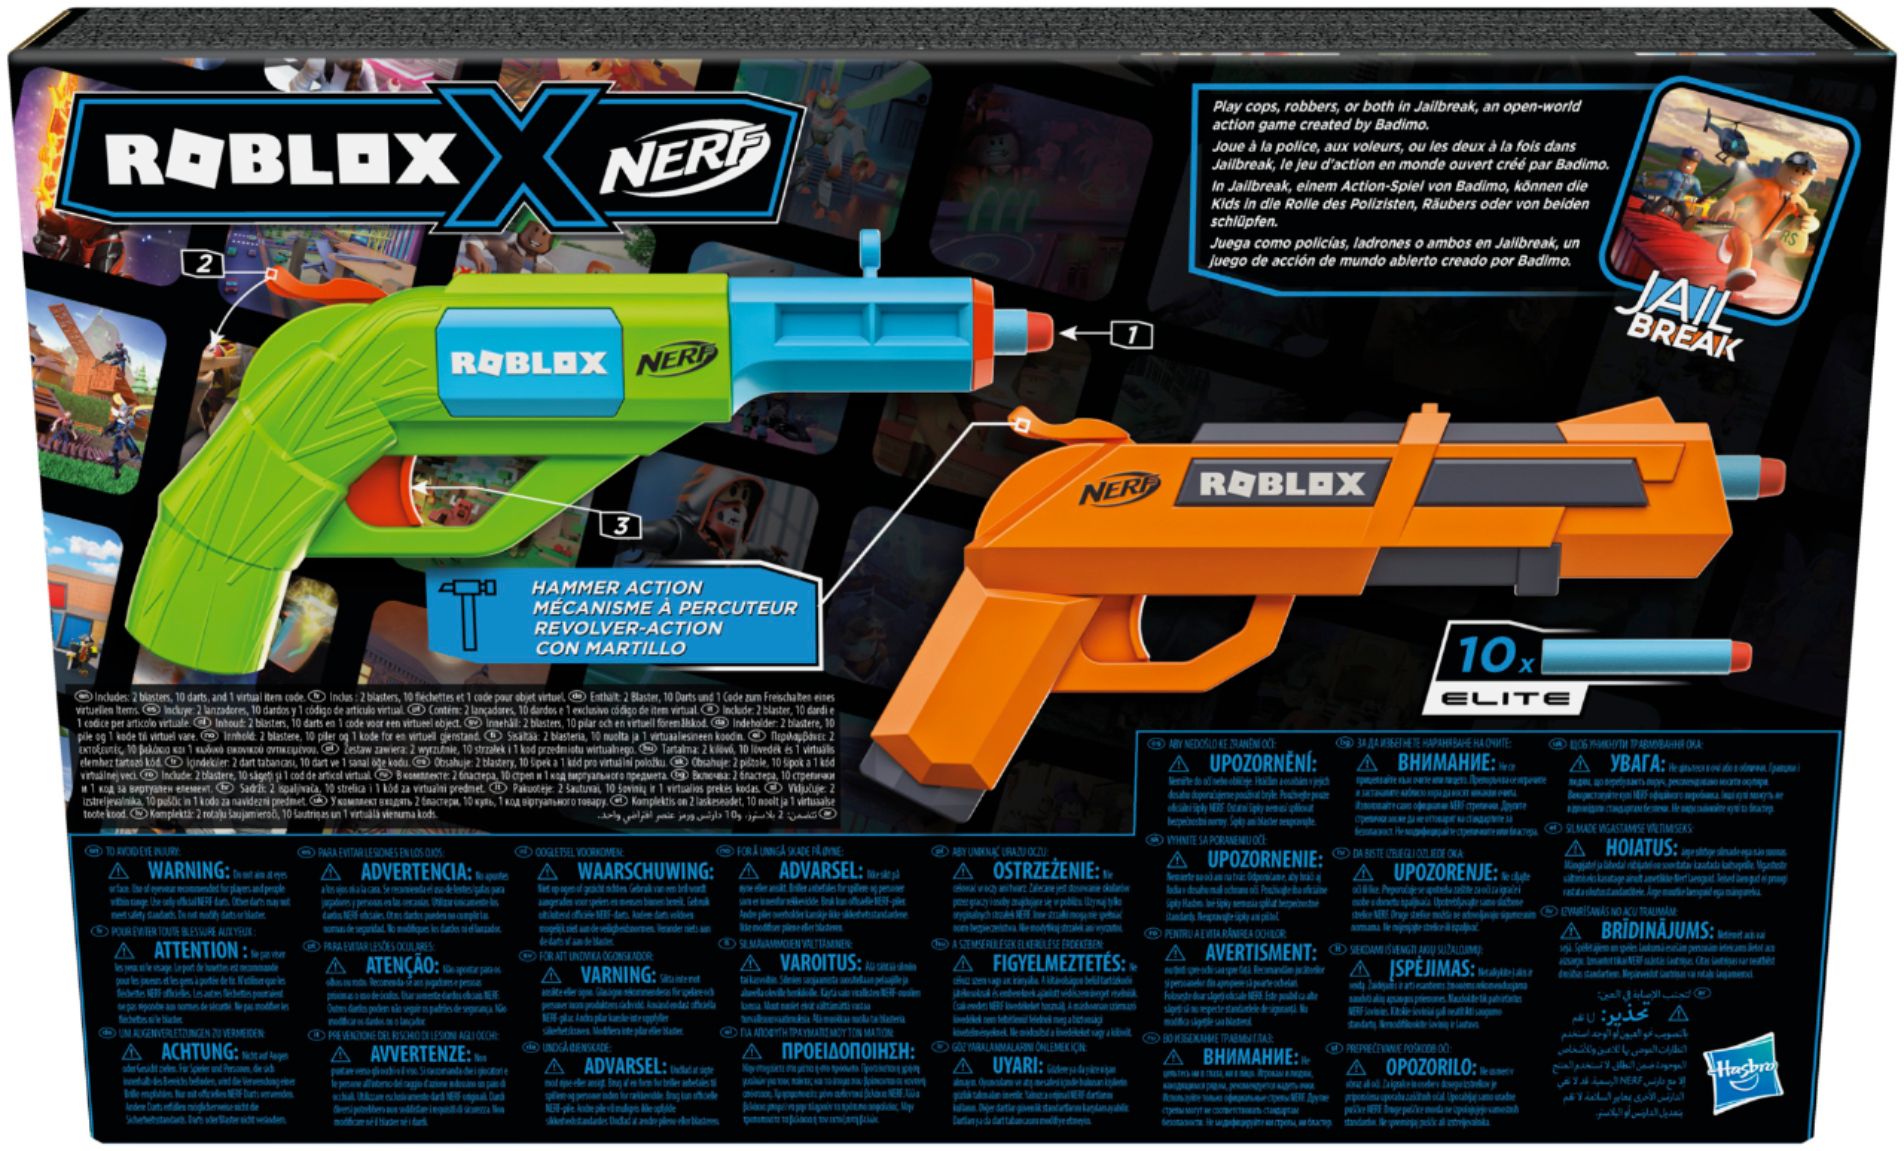 Nerf Roblox Jailbreak: Armory Blaster 2-Pack